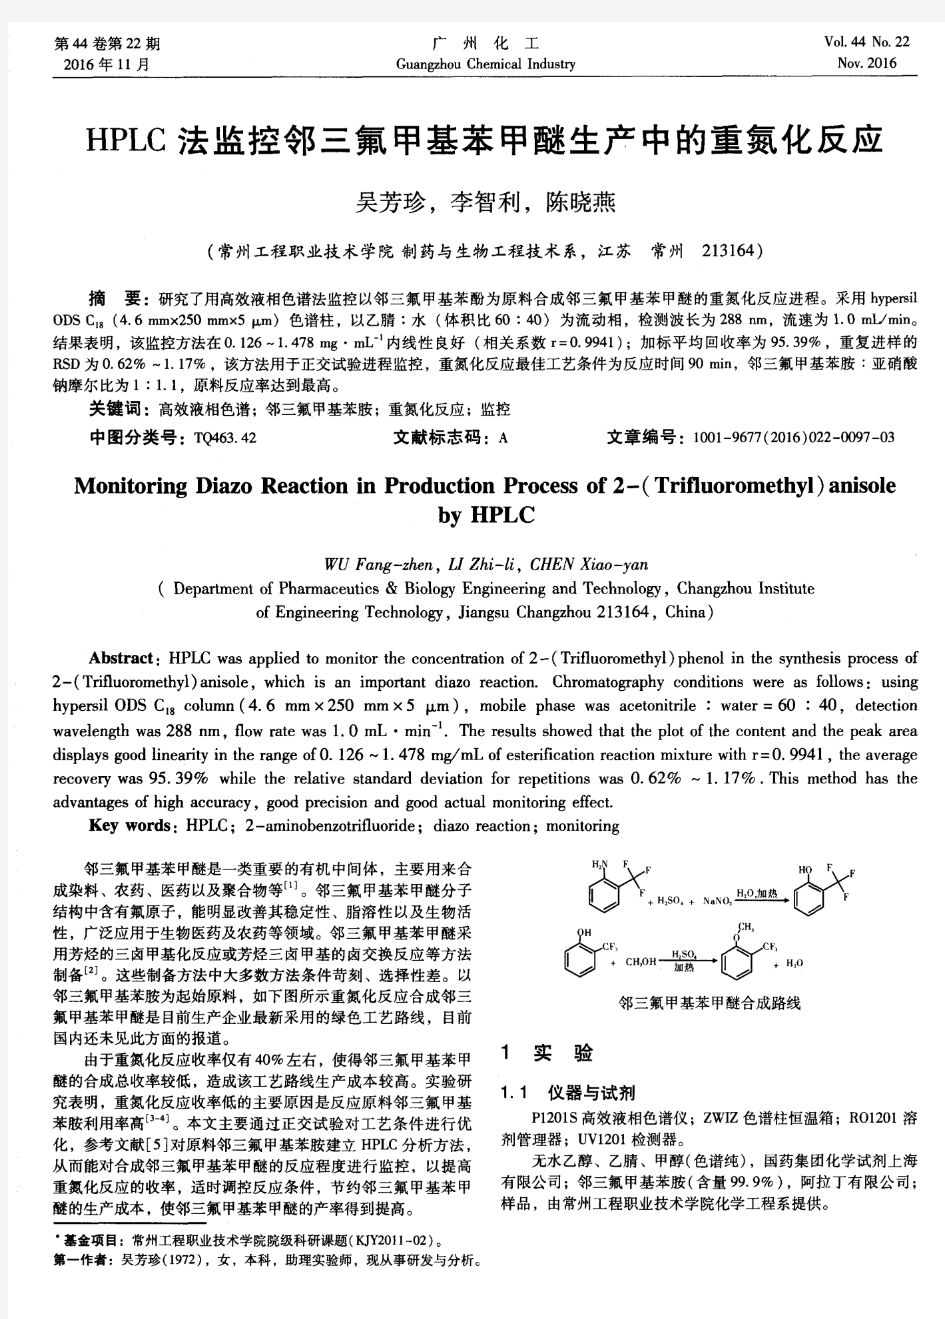 HPLC法监控邻三氟甲基苯甲醚生产中的重氮化反应